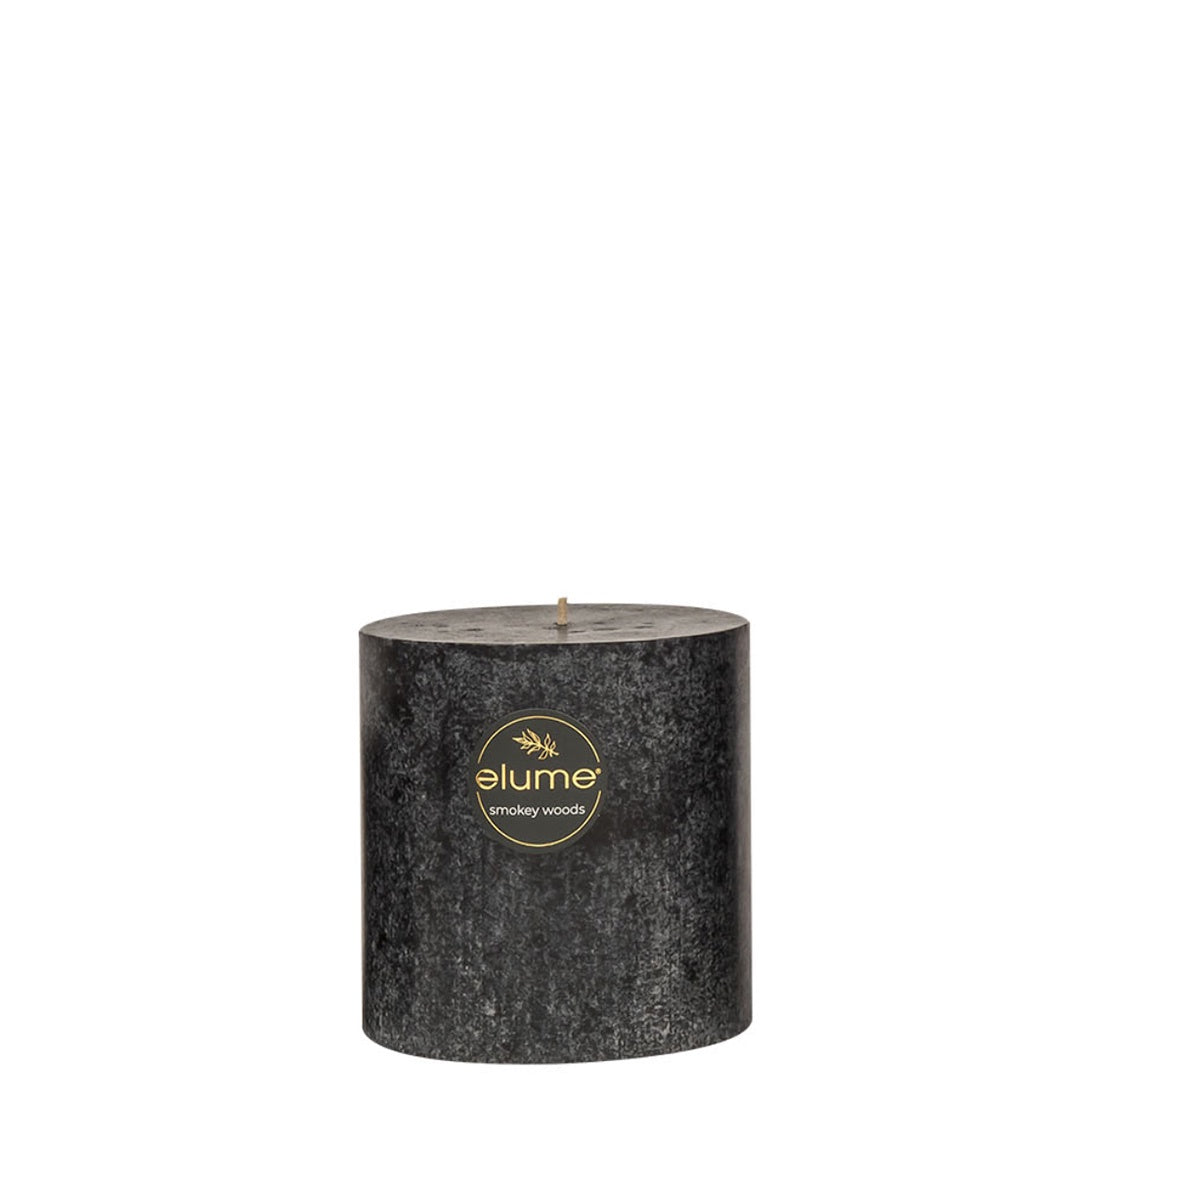 Smokey Woods Pillar Candle 4x4